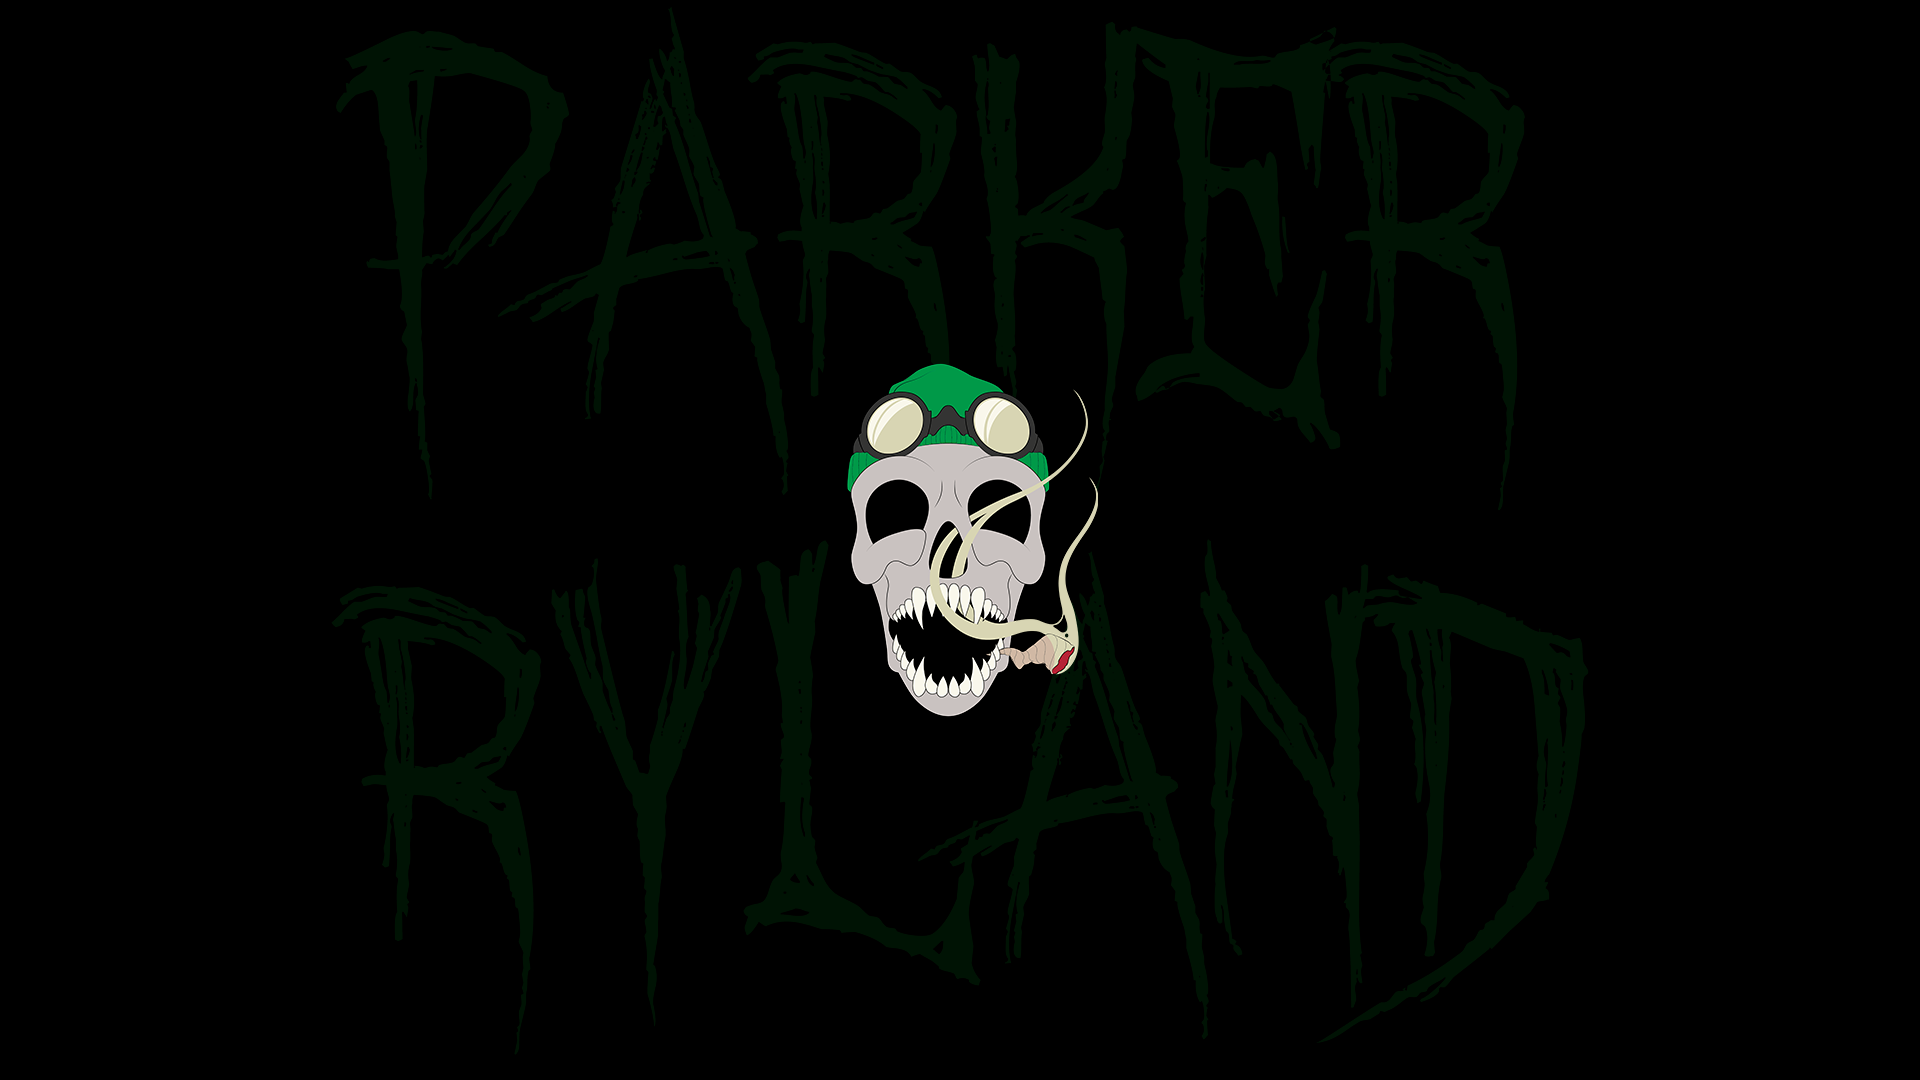 ParkerRyland